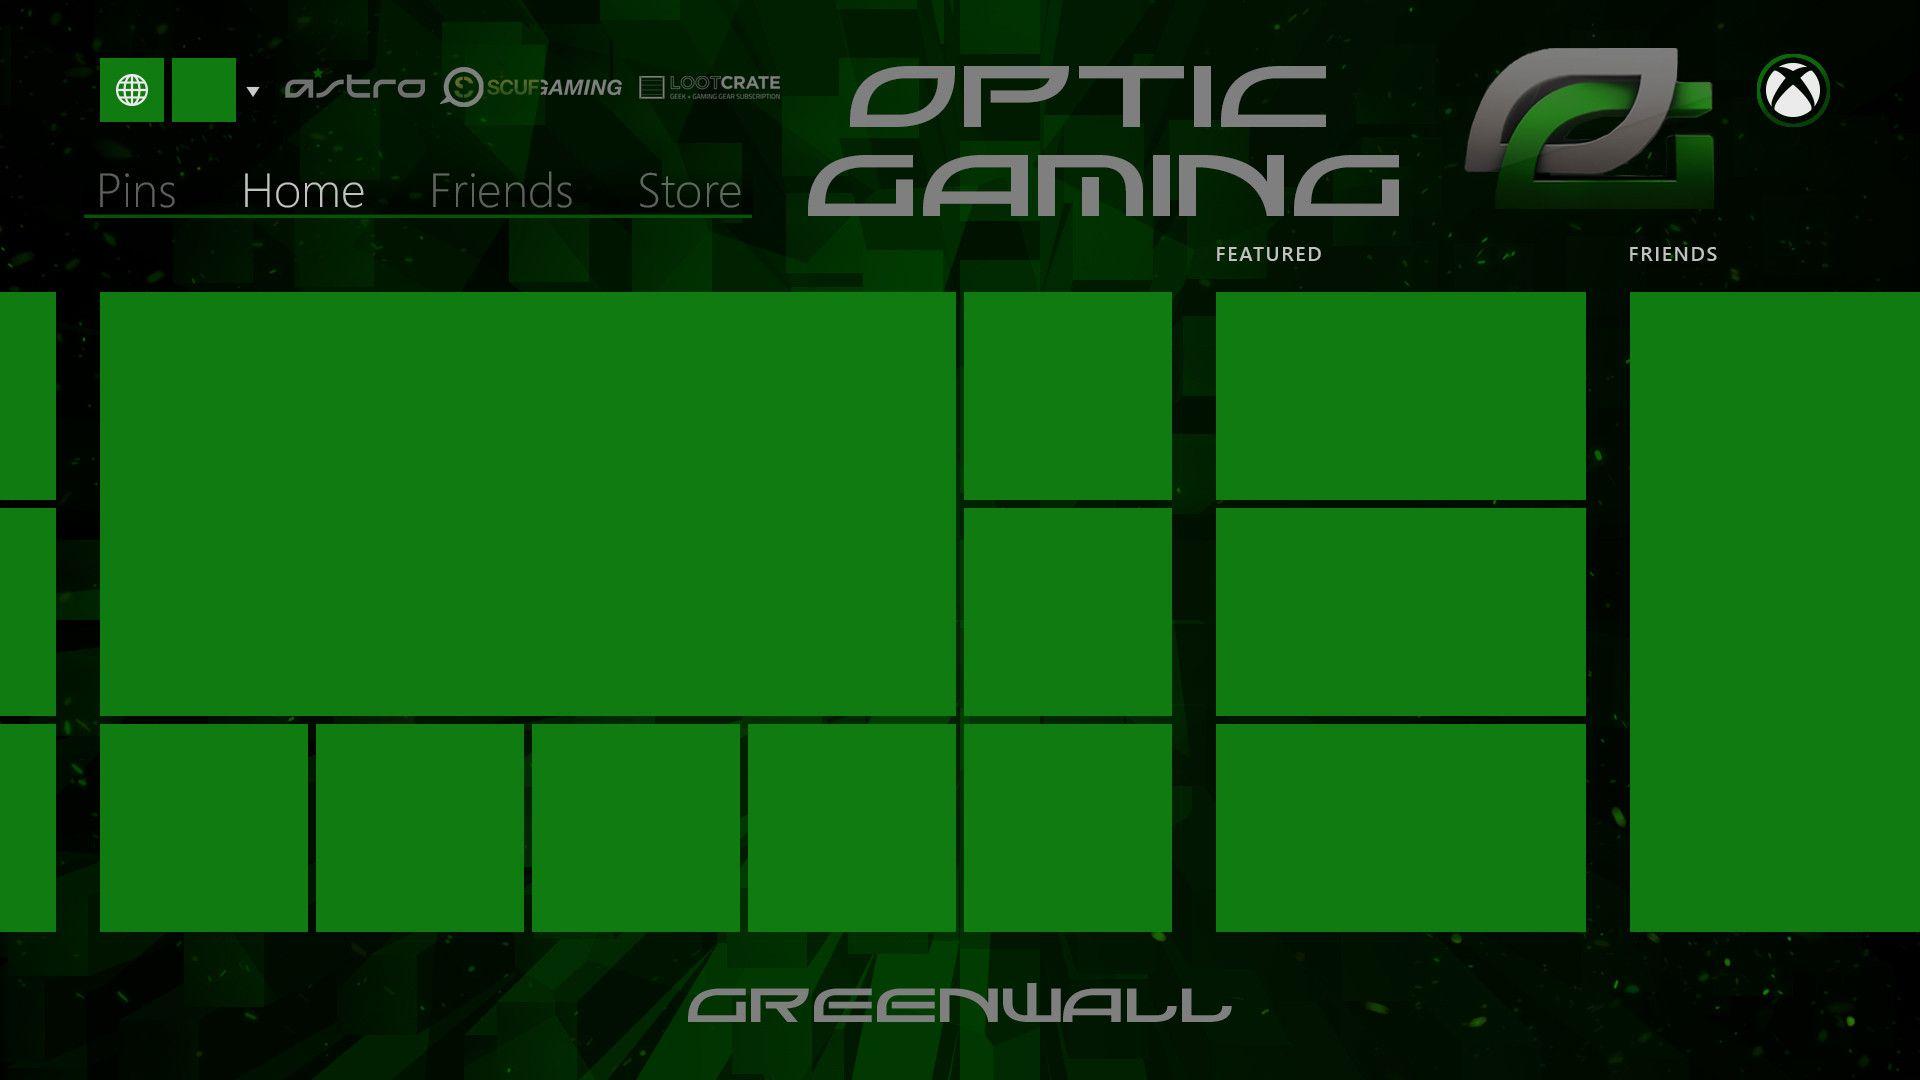 Xbox One dashboard background, OpTic style : OpTicGaming